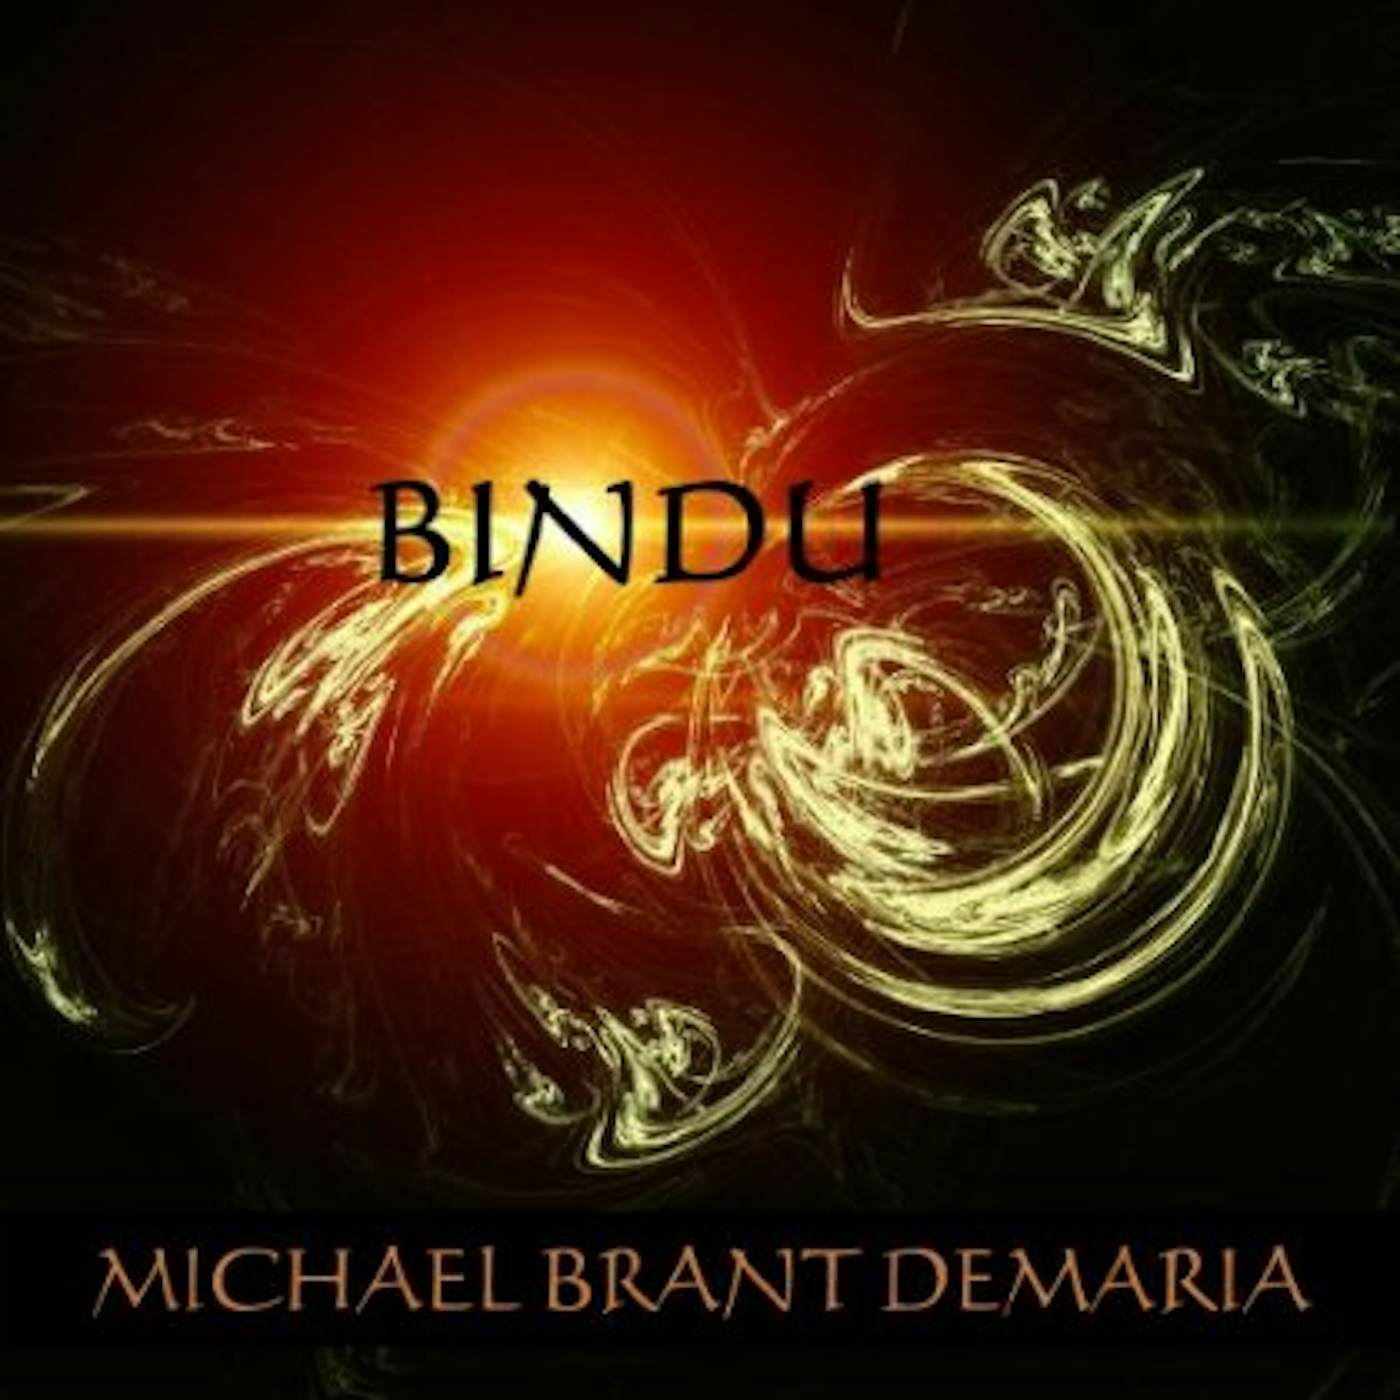 Michael Brant DeMaria BINDU CD